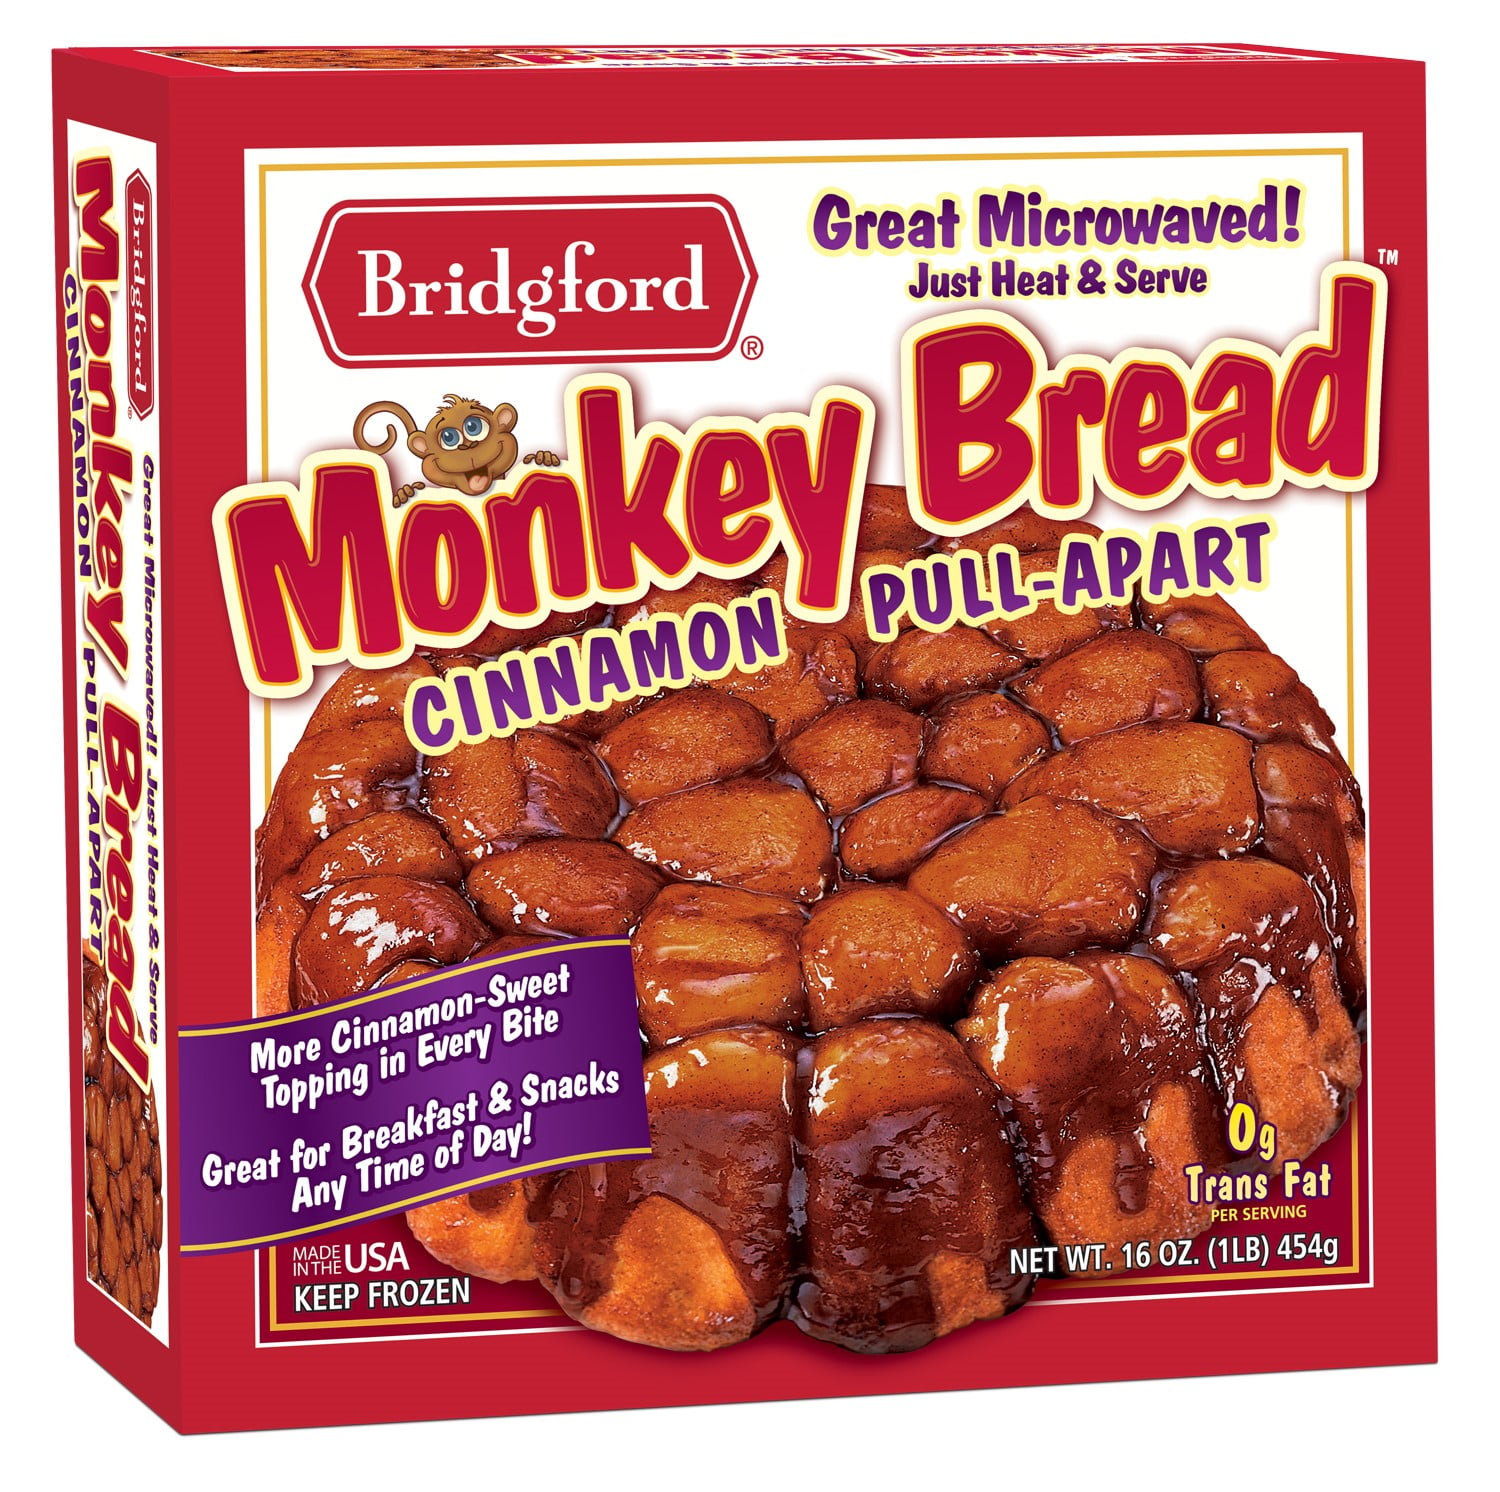 Bridgford Cinnamon Pull-Apart Monkey Bread, 16 oz pic